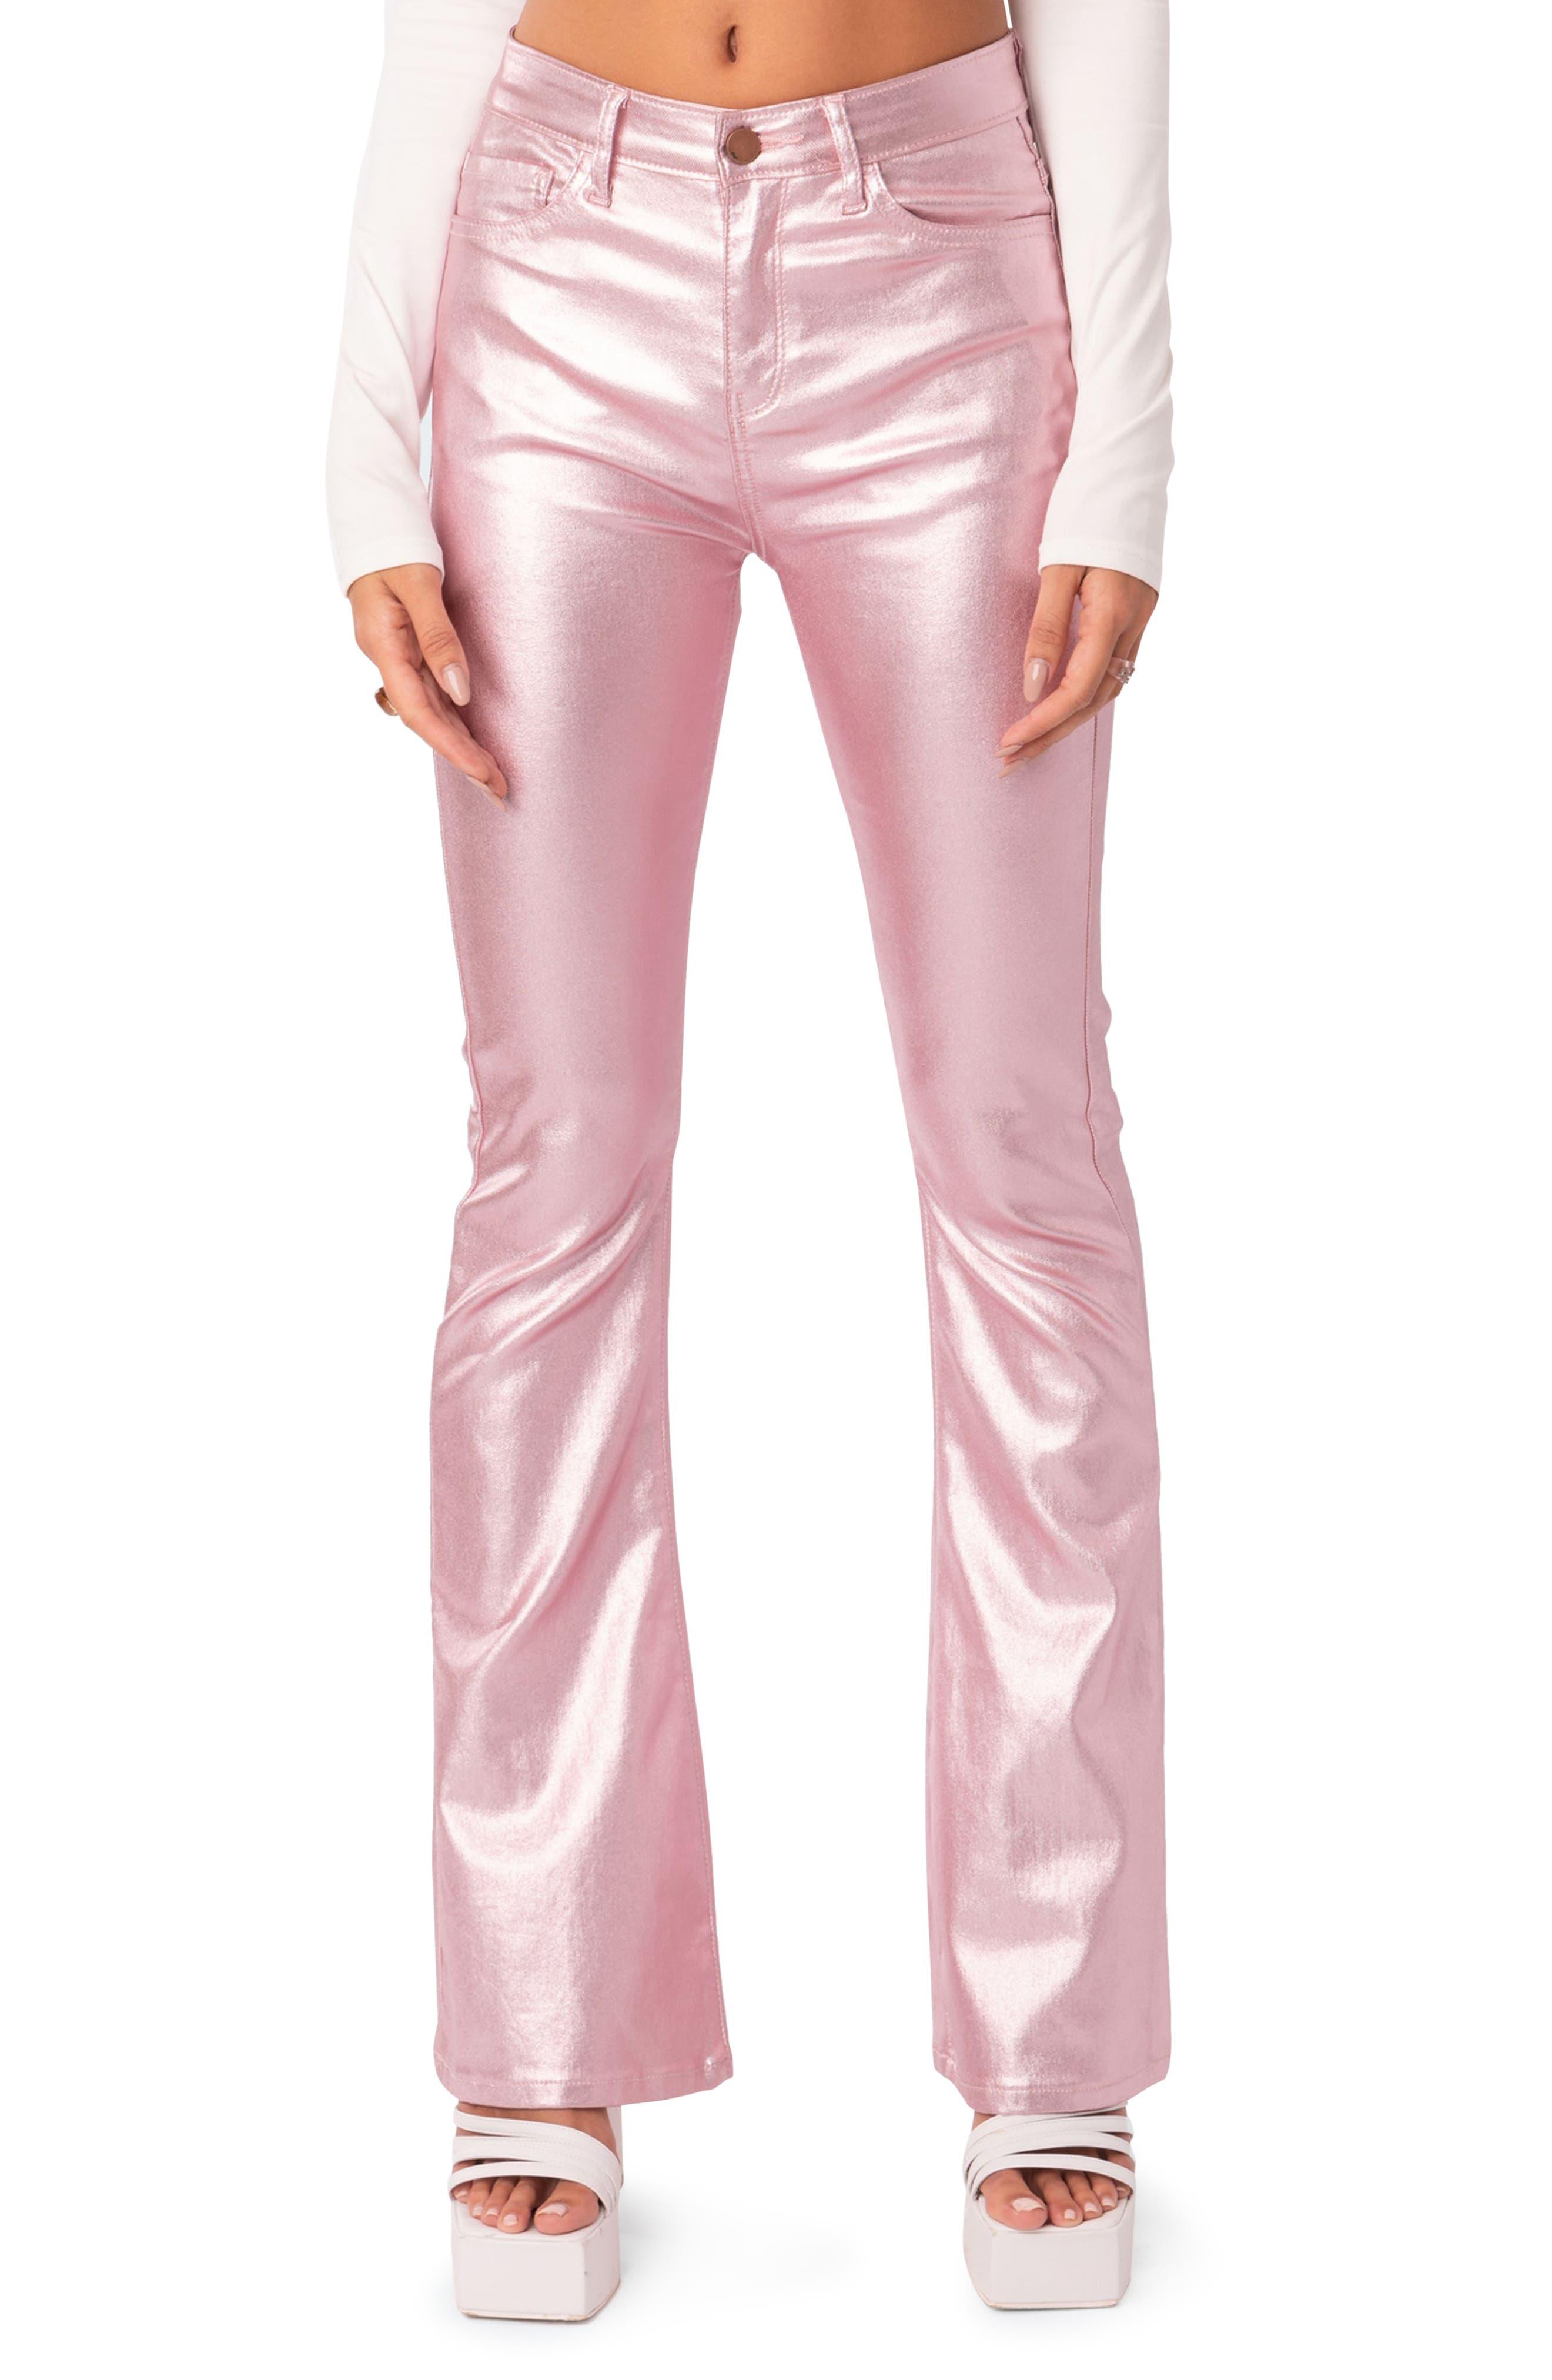 Edikted Luna Metallic Faux Leather Flare Jeans in Pink | Lyst